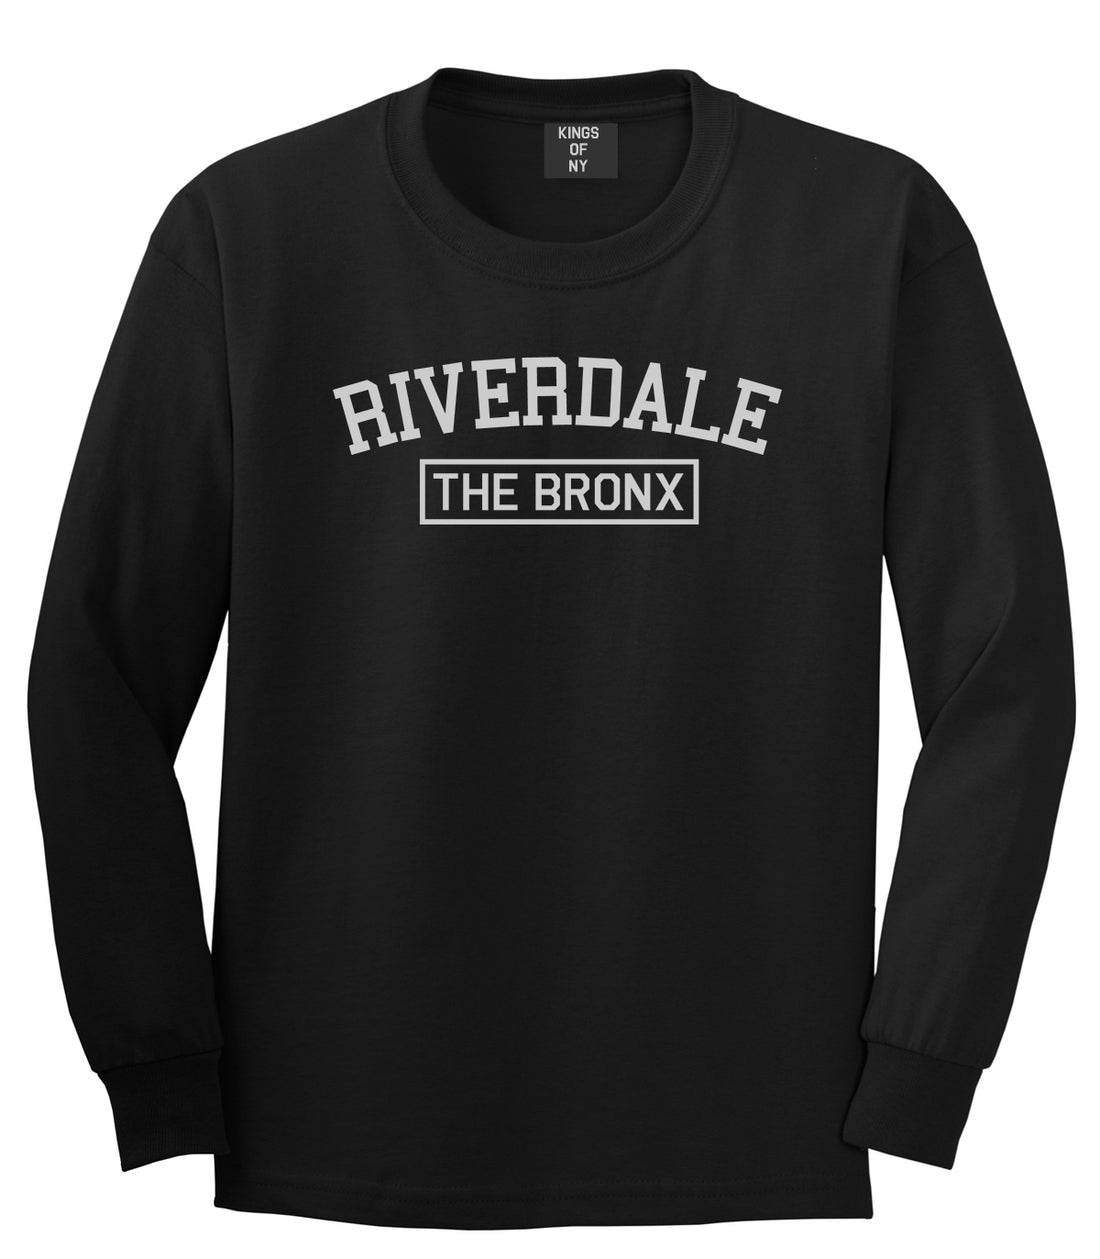 Riverdale The Bronx NY Mens Long Sleeve T-Shirt Black